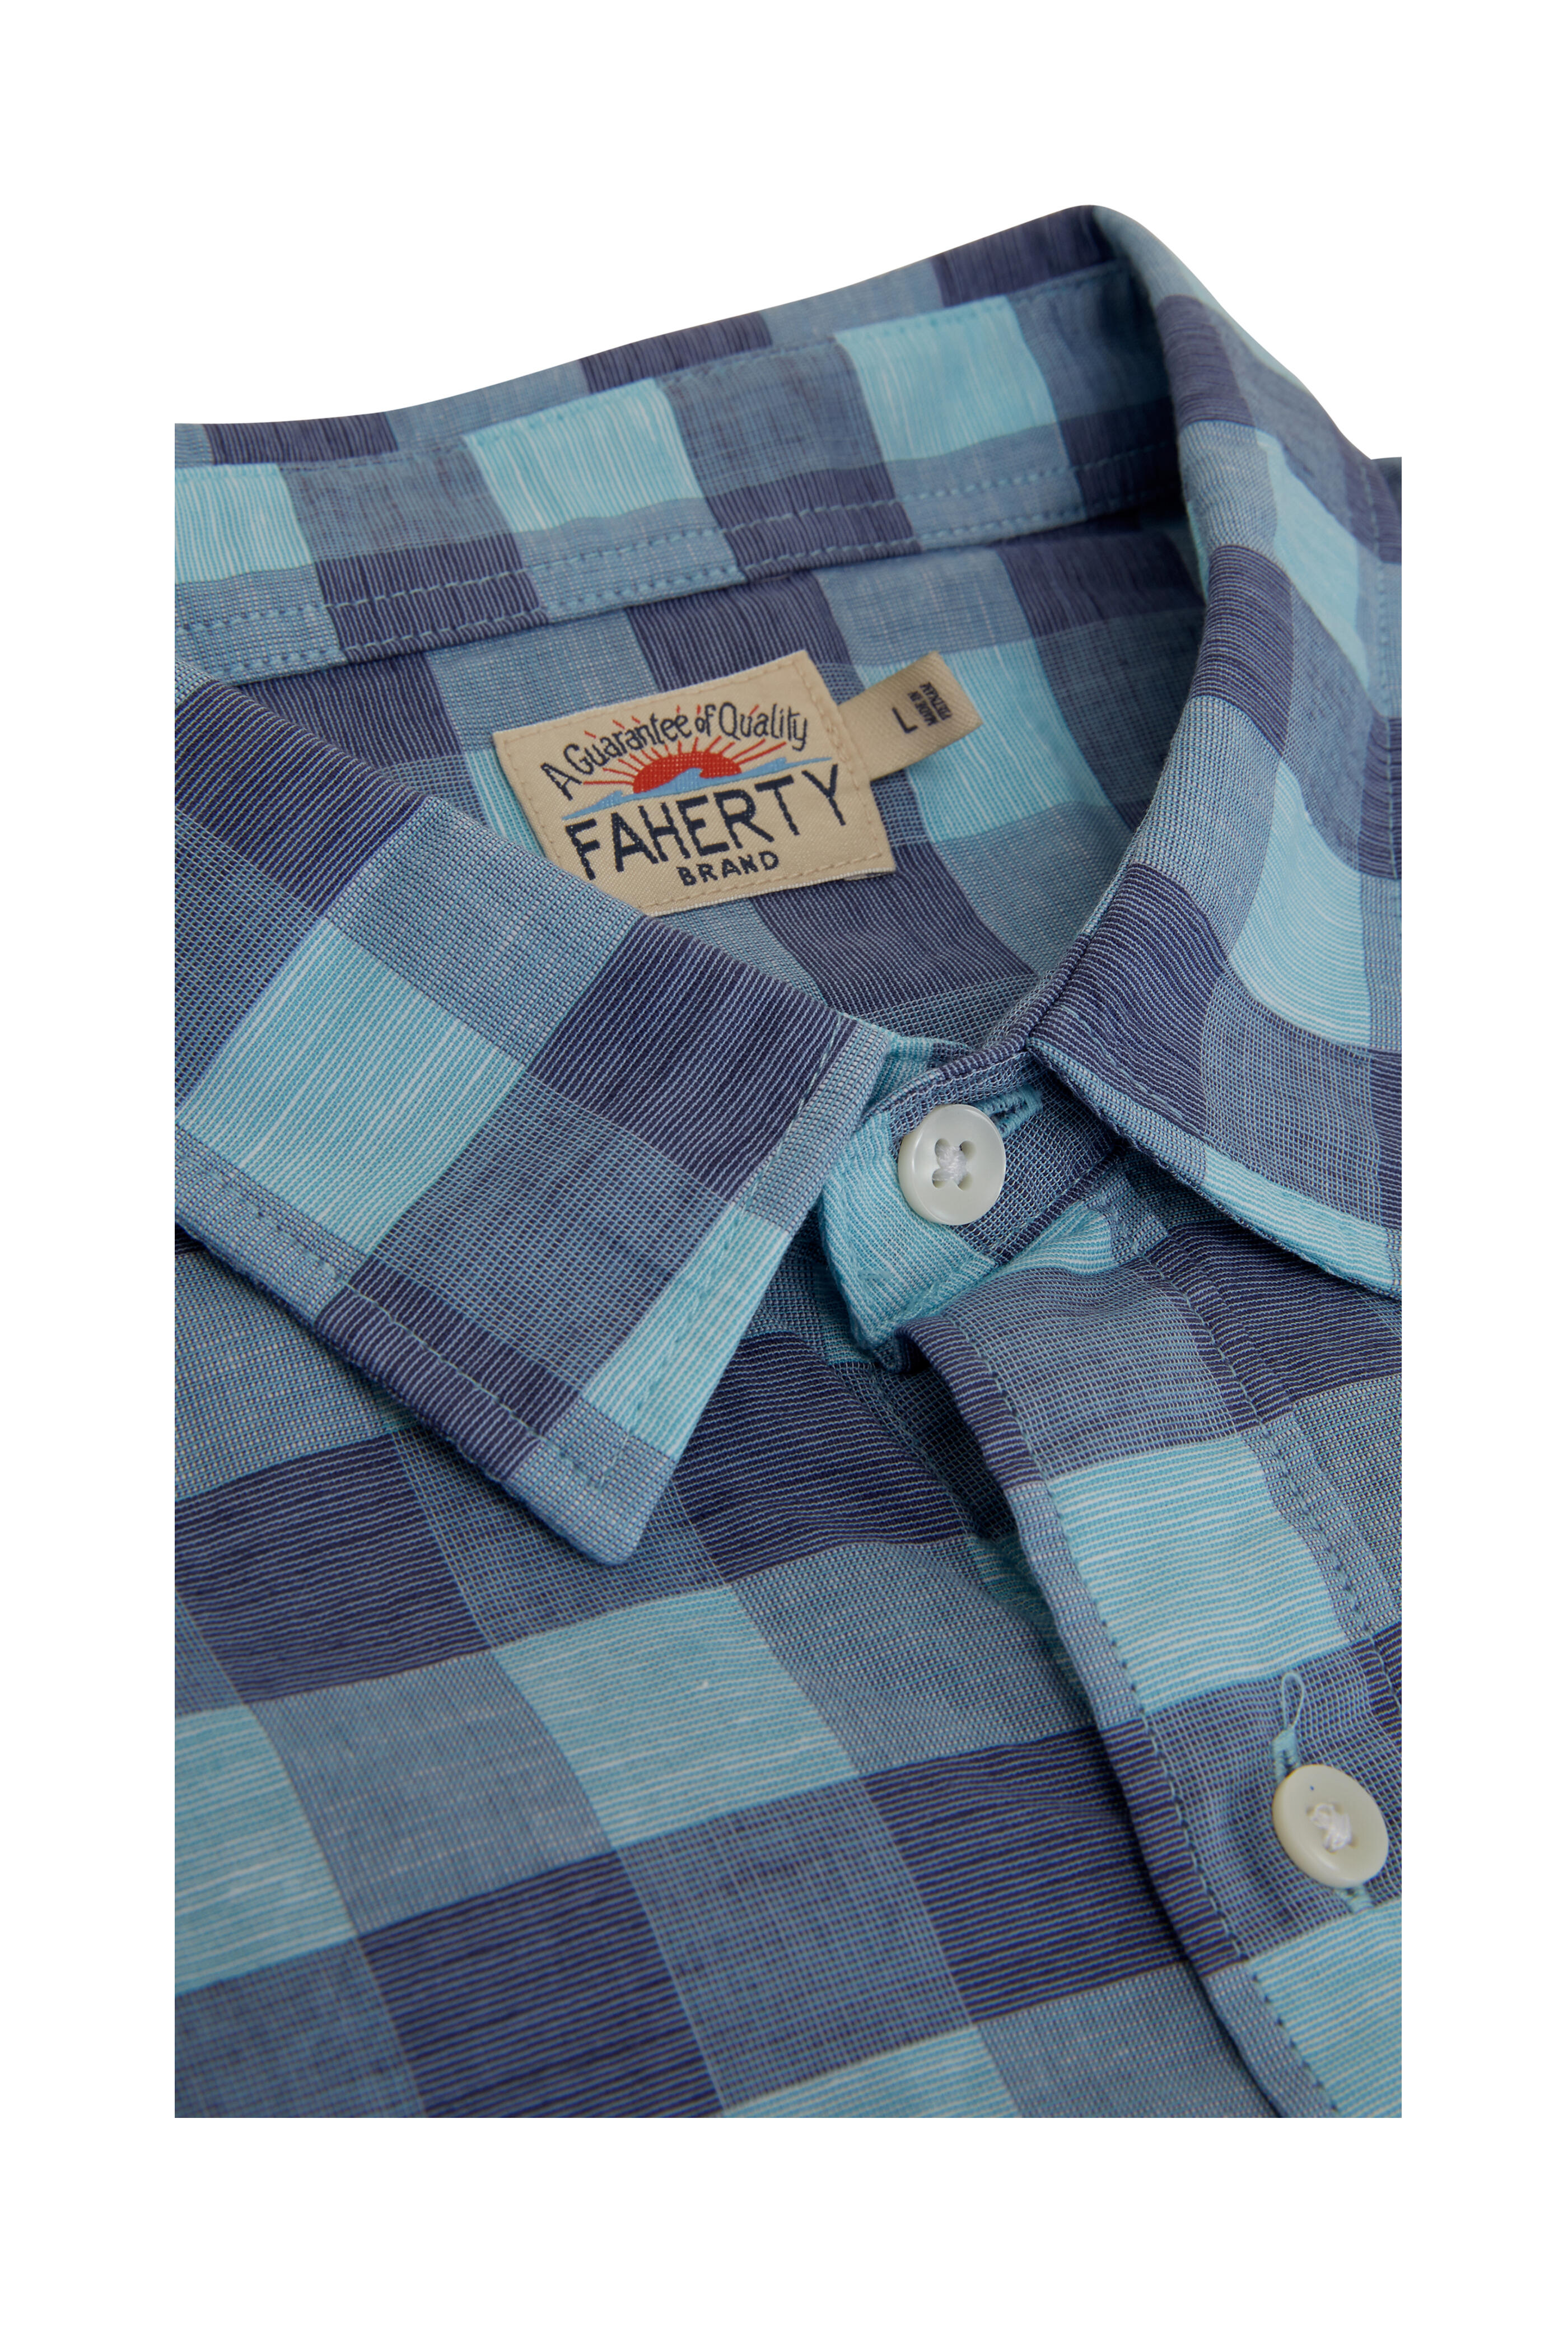 Faherty Brand - Movement Blue Coral Plaid Sport Shirt